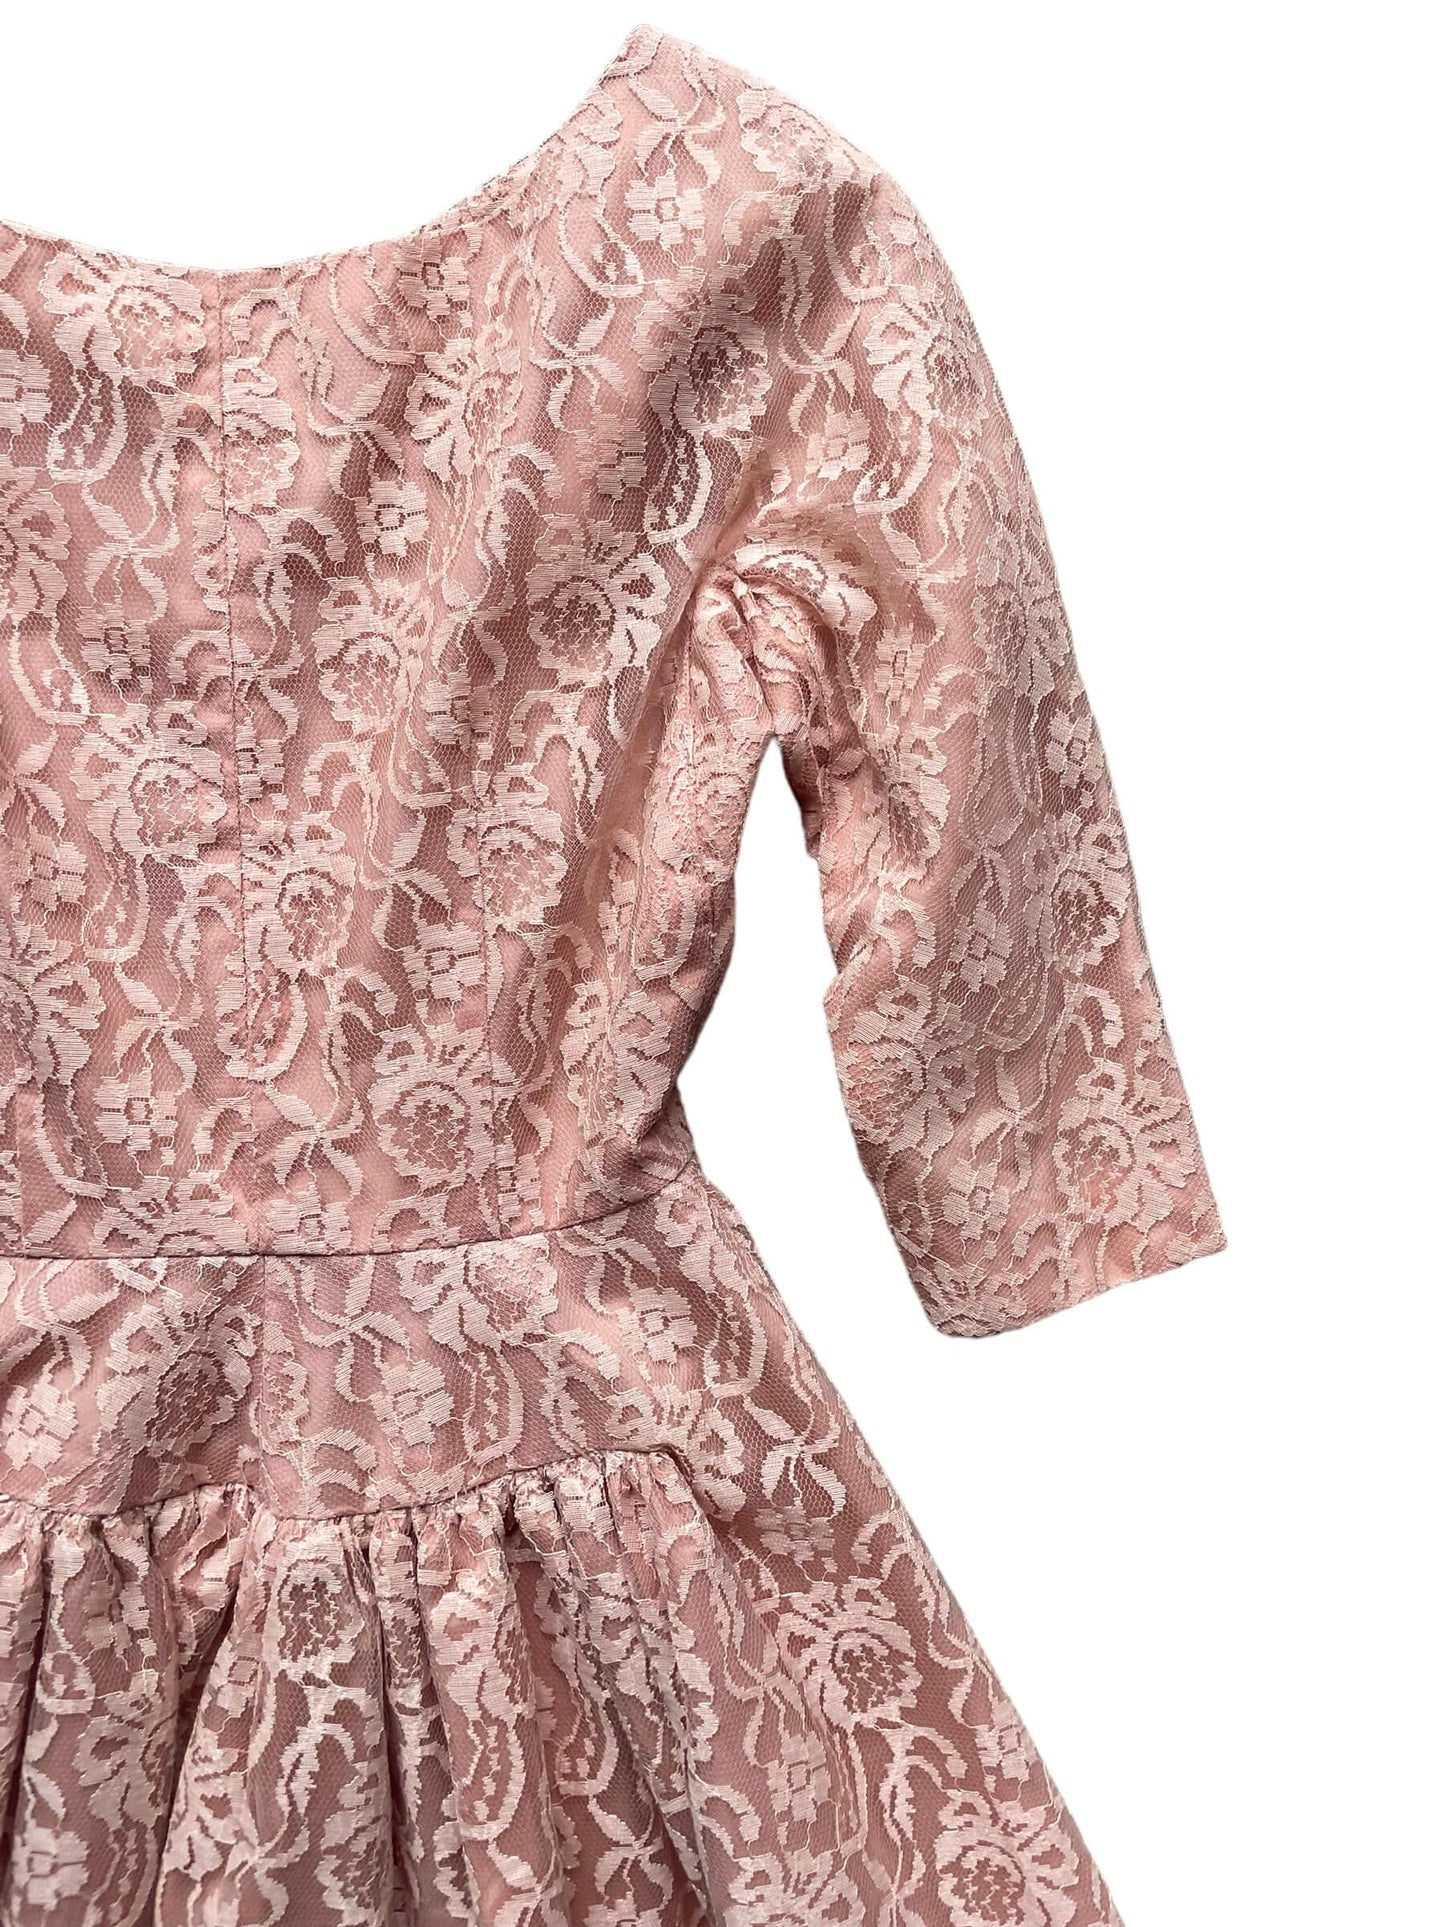 Back right shoulder view of Vintage 1950s Handmade Pink Lace Formal Dress |  Barn Owl Vintage Dresses | Seattle Vintage Ladies Clothing